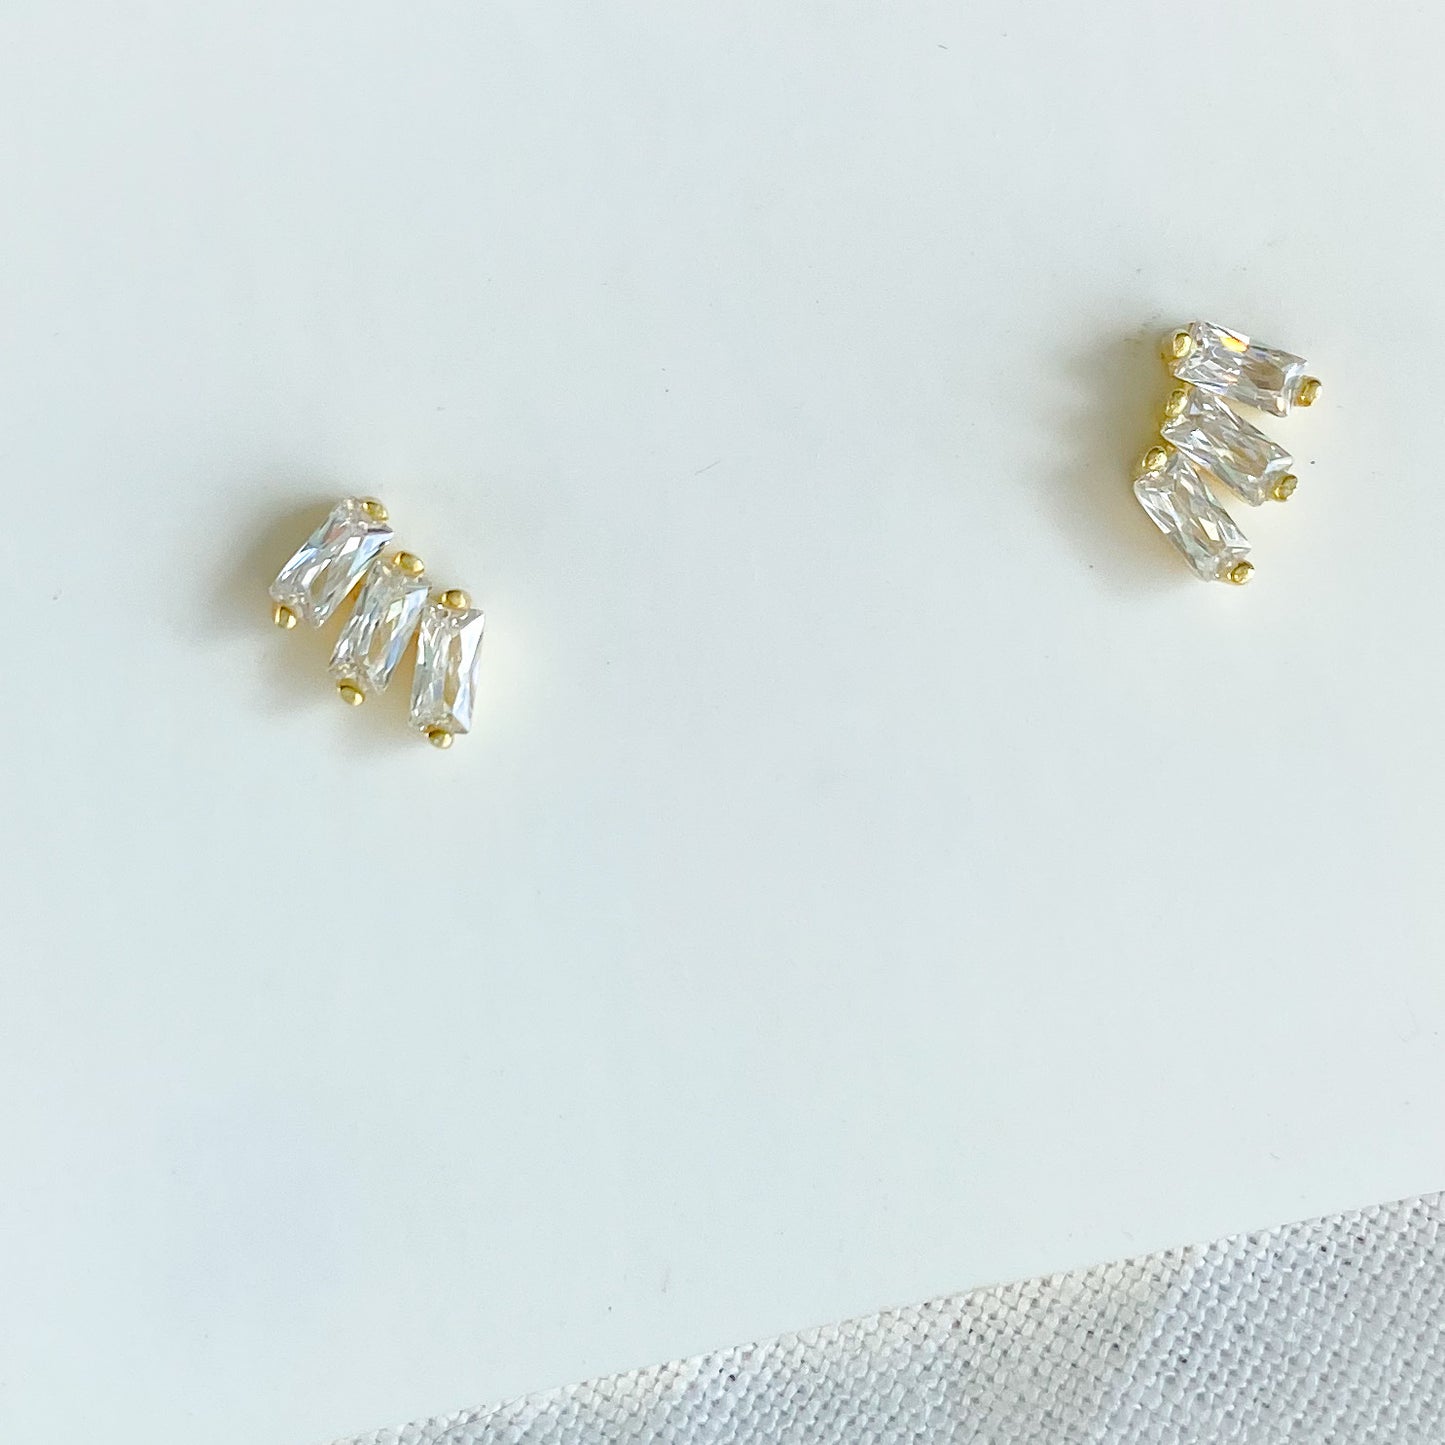 Beverly Glen Stud Earrings - Bellestyle sterling silver gold post everyday baguette crystals